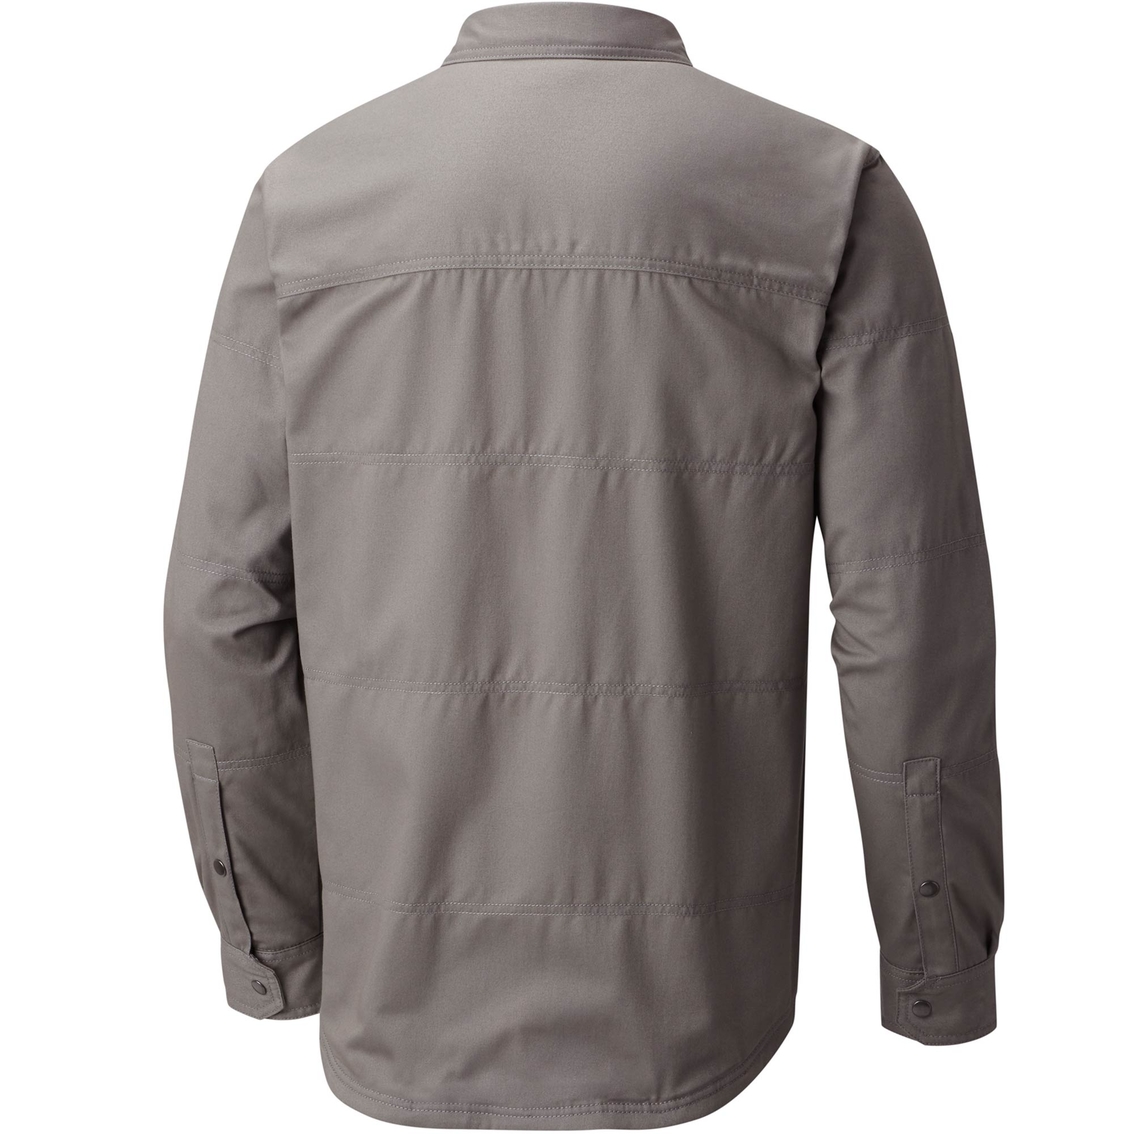 Columbia Log Vista Shirt Jacket - Image 2 of 2